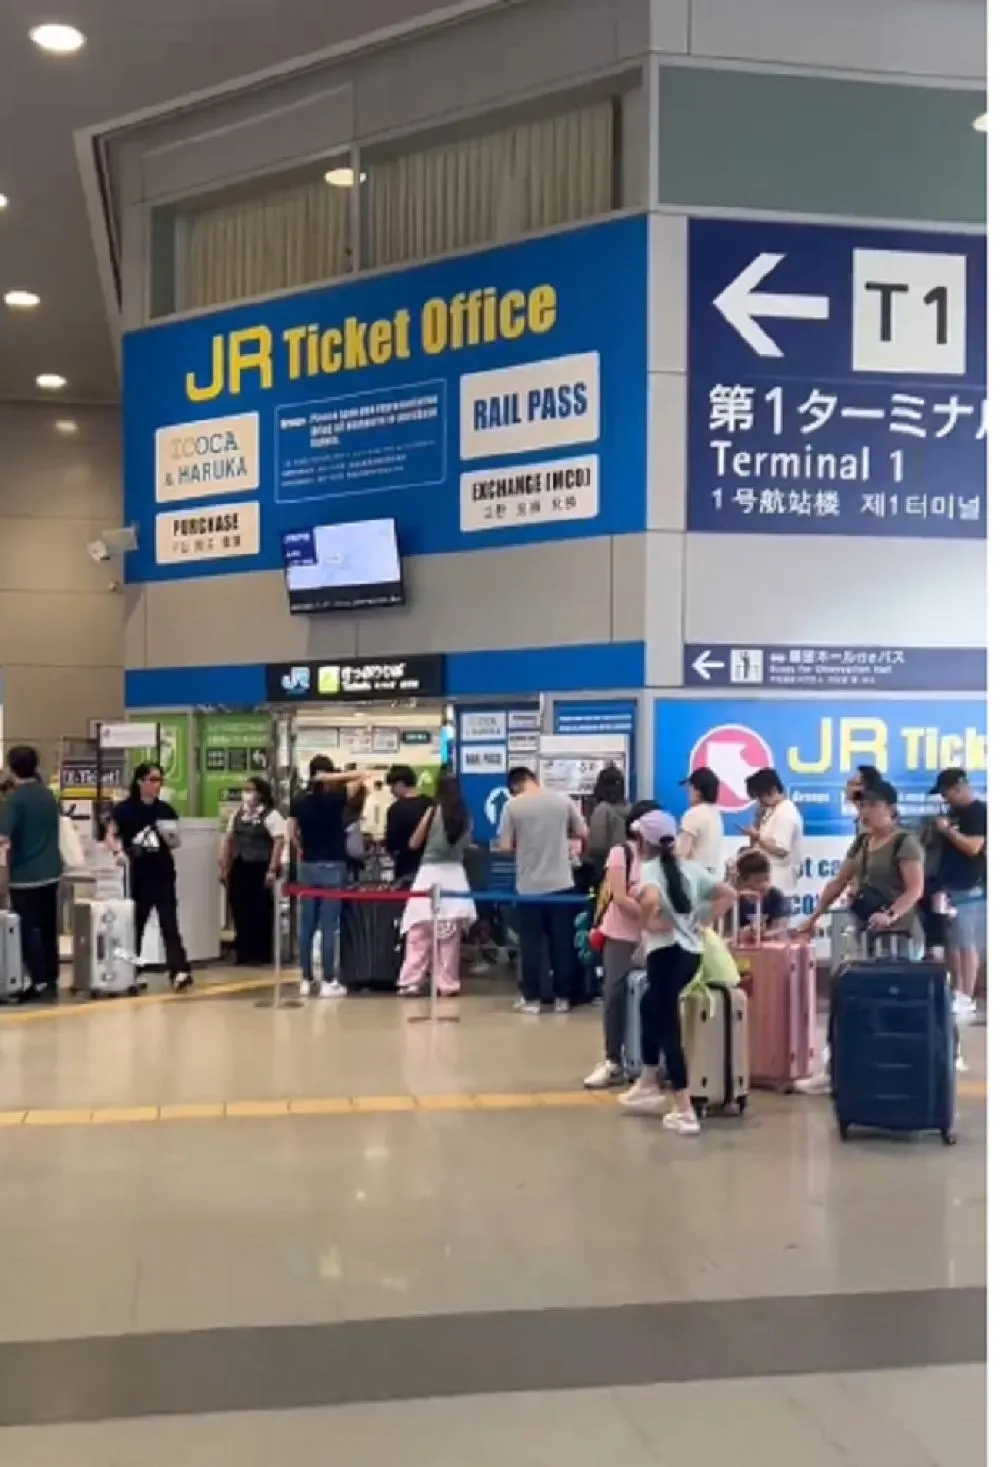 How to Use Haruka Express Tickets